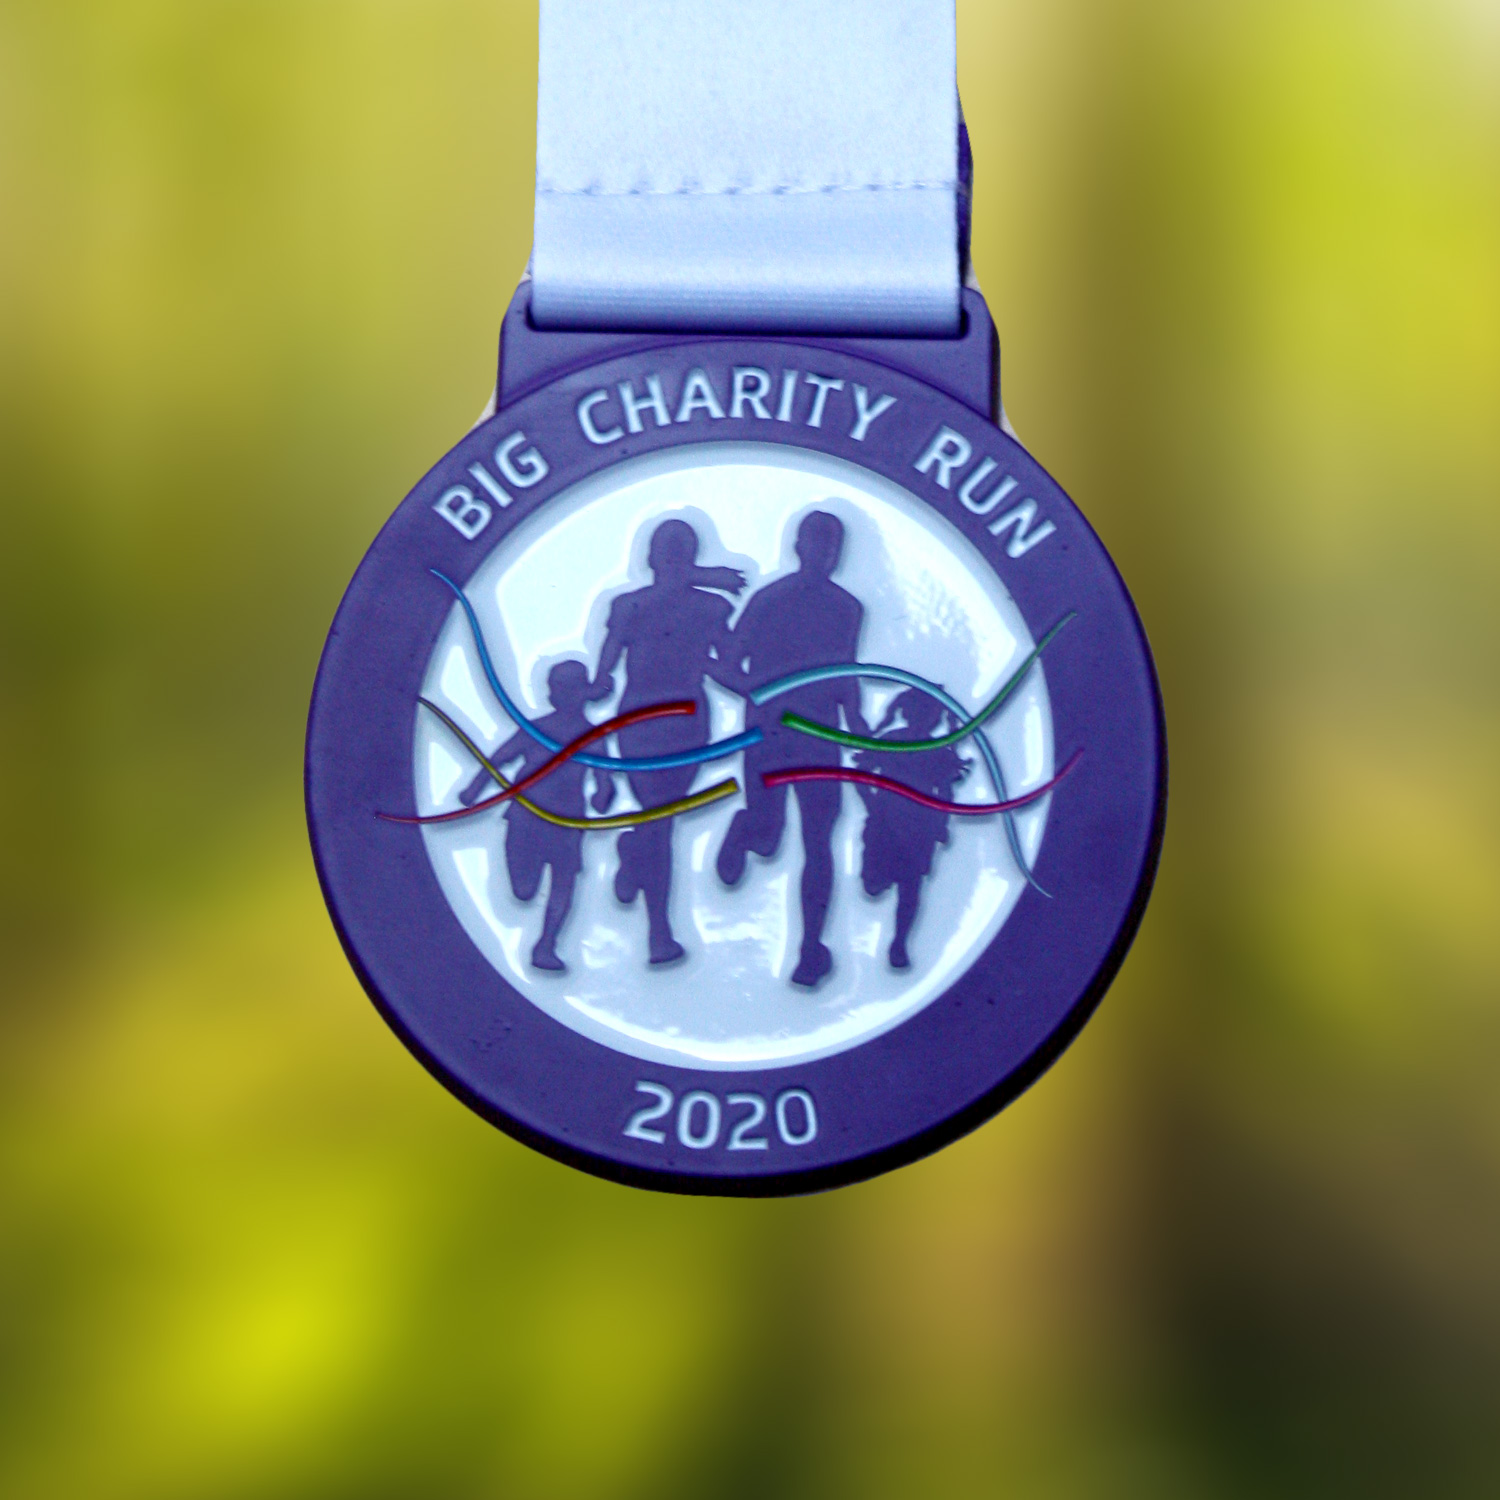 The Big Charity Run 2020 medal